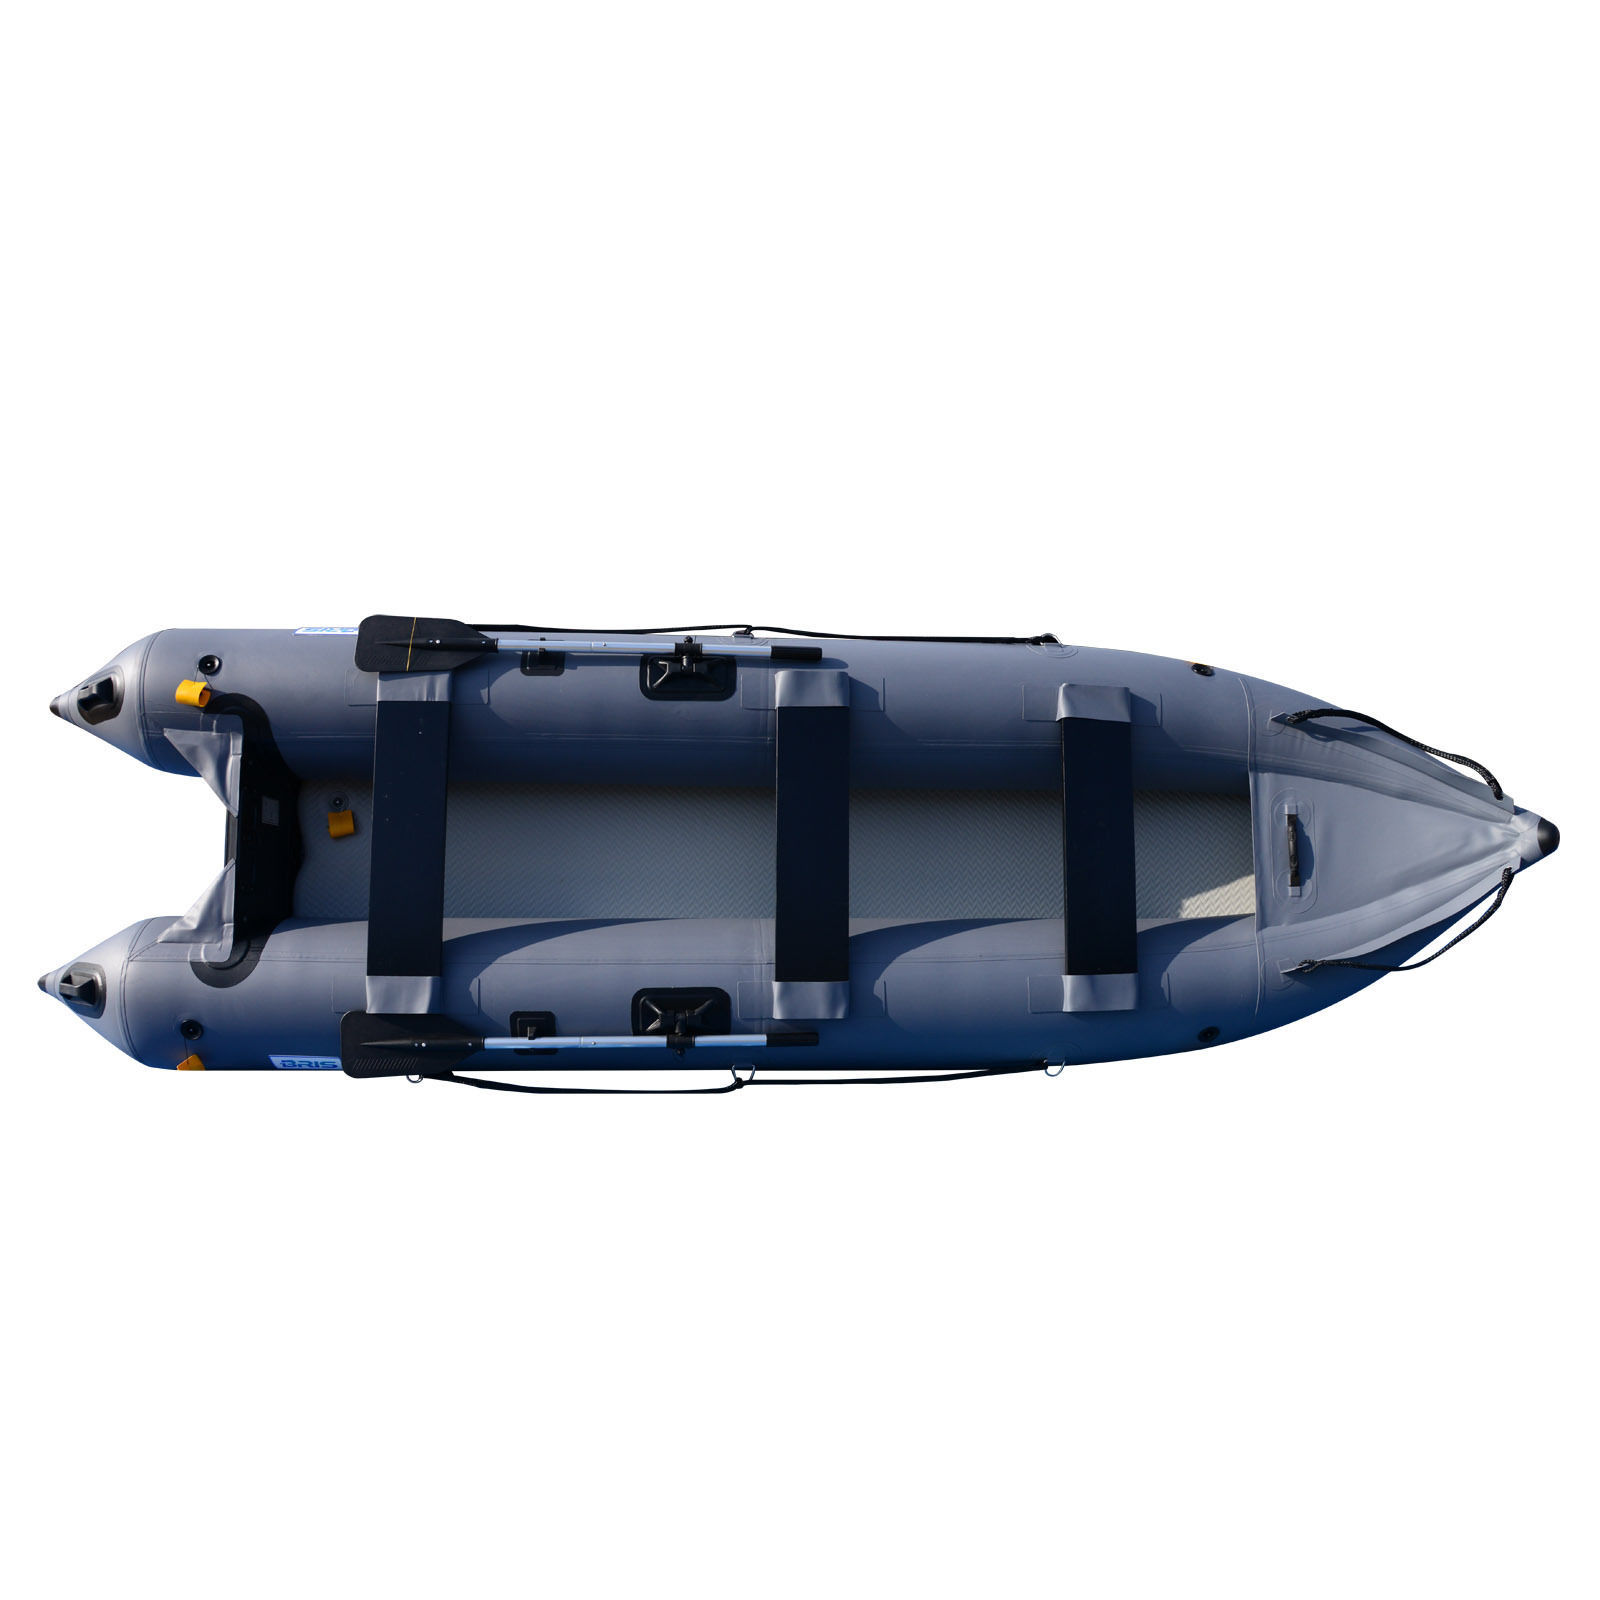 bris 14.1ft inflatable kayak boat fishing tender poonton